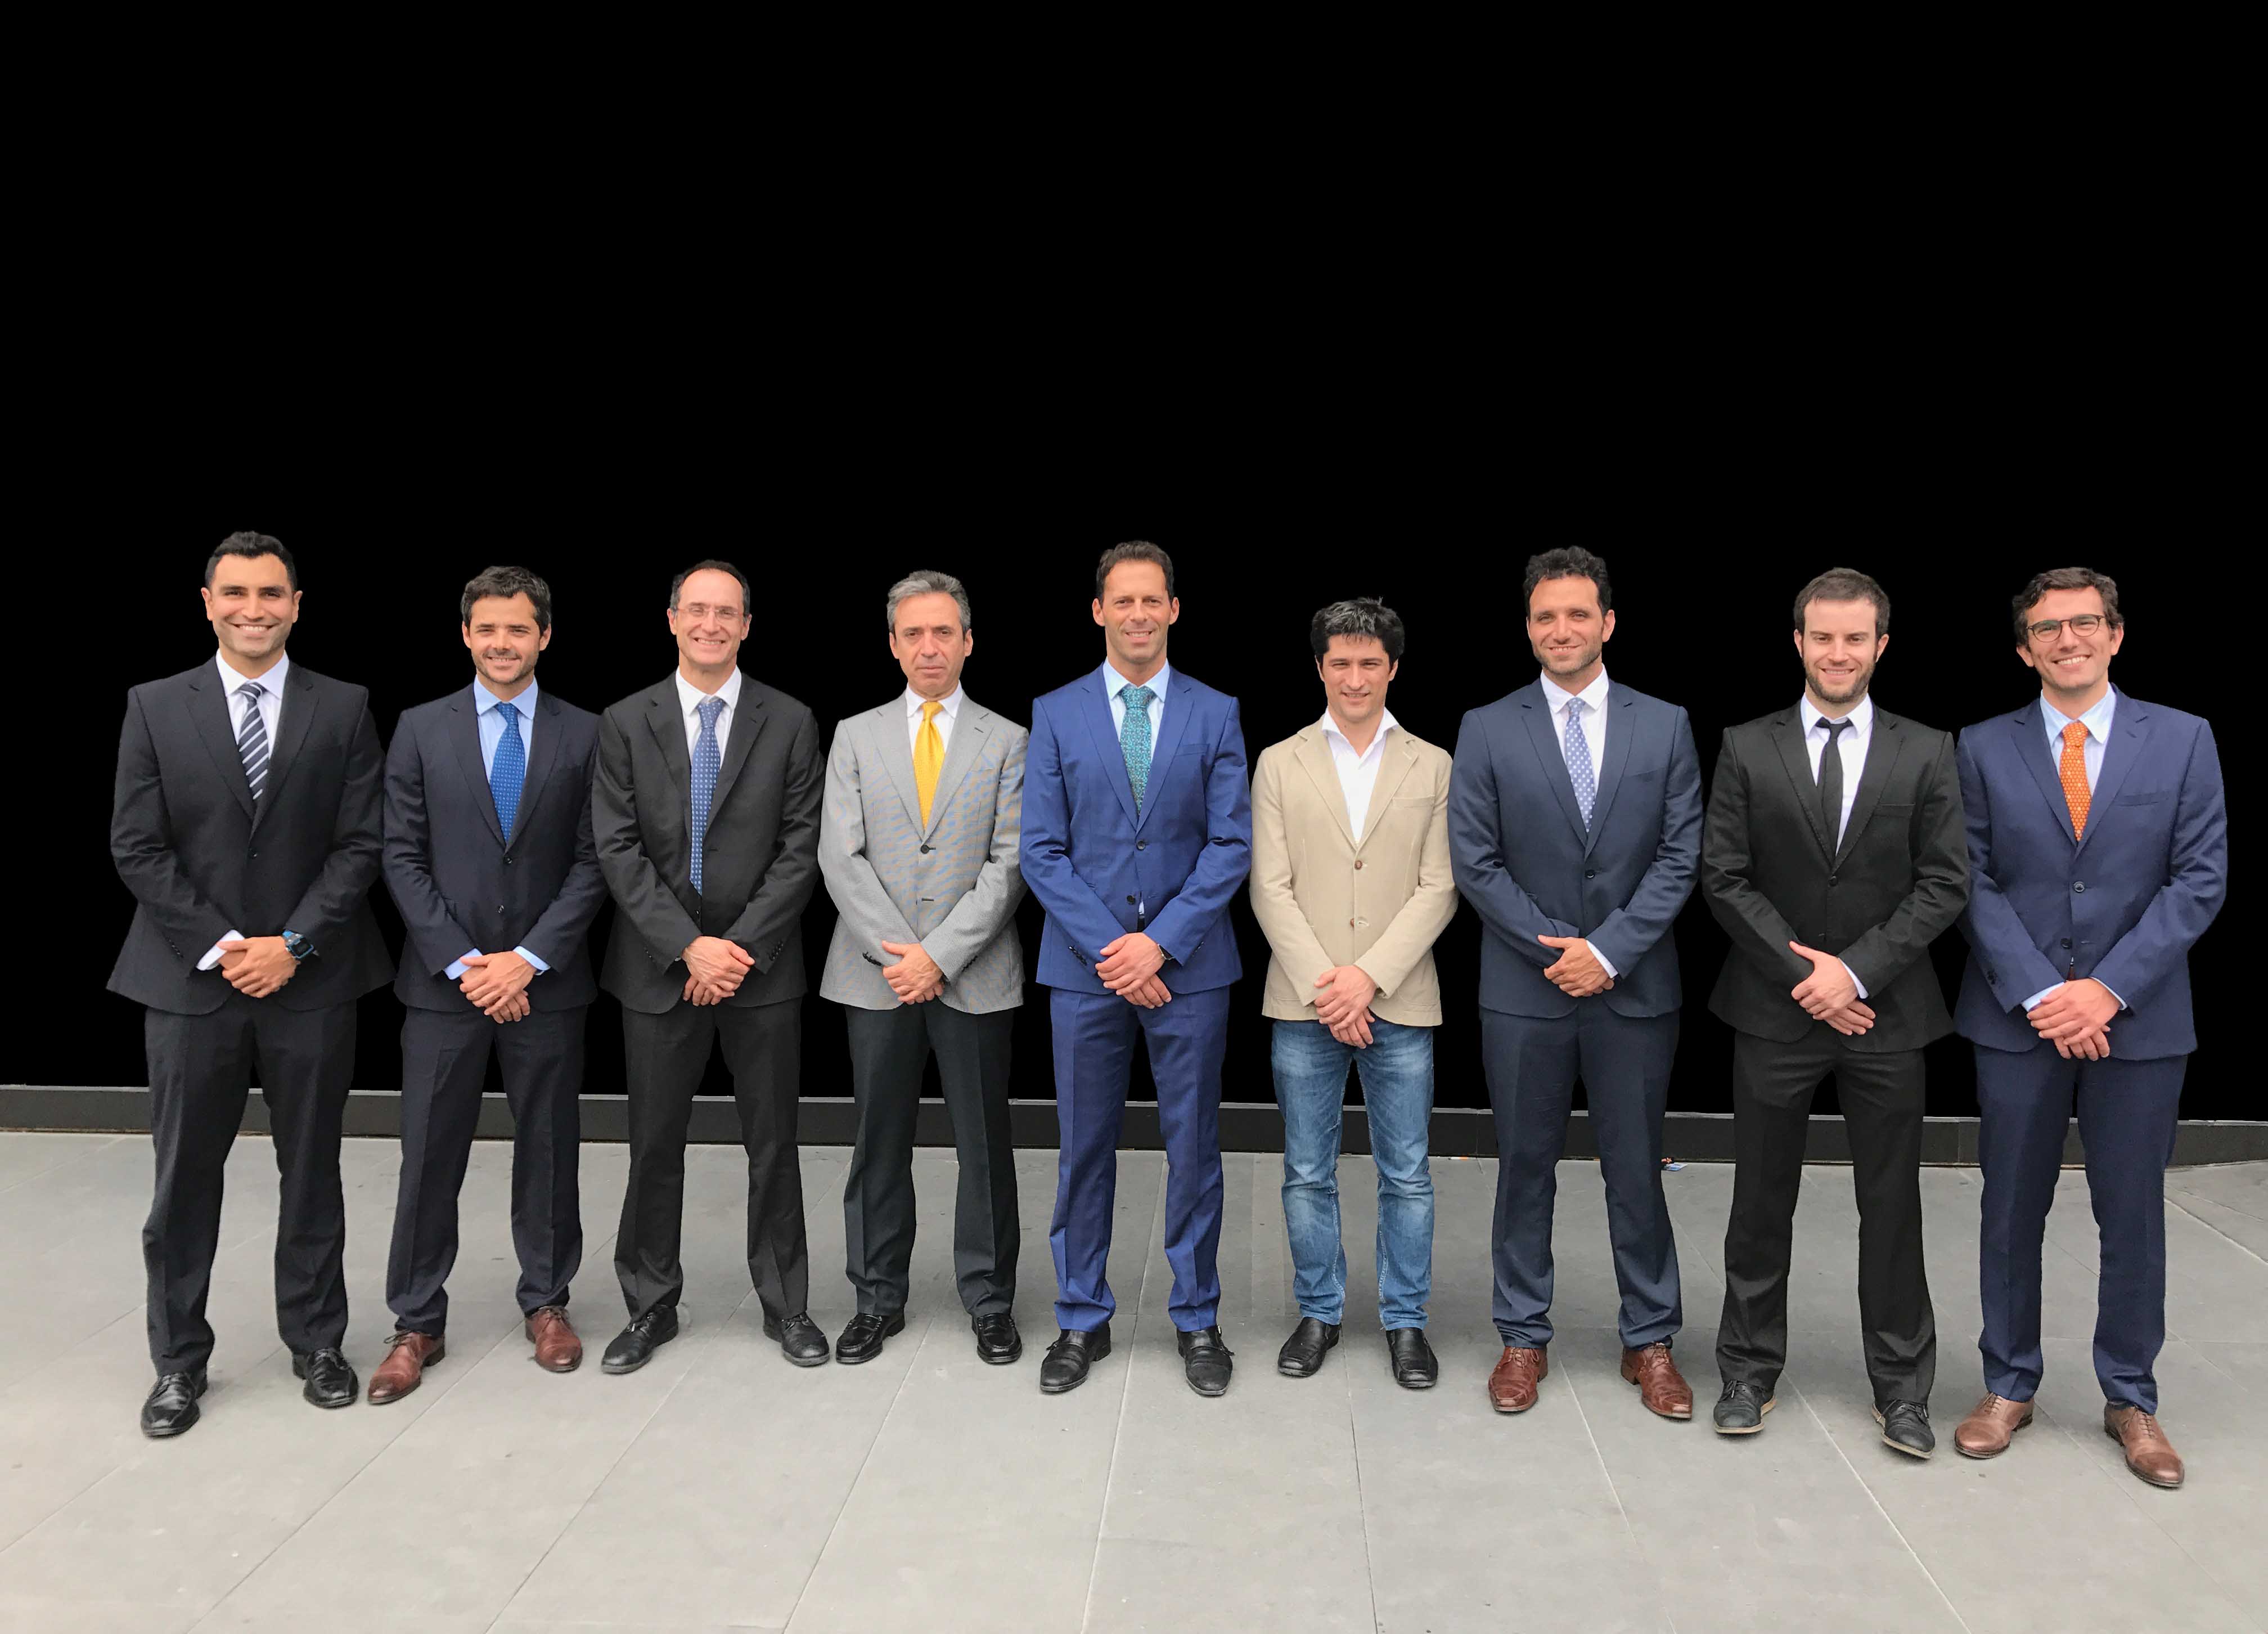 D’esquerra a dreta: Federico Ibáñez, Juan Erquicia, Xavier Pelfort, Joan Carles Monllau, Pablo Gelber, Raúl Torres, Maximiliano Ibáñez, Àngel Masferrer y Daniel Pérez Prieto.